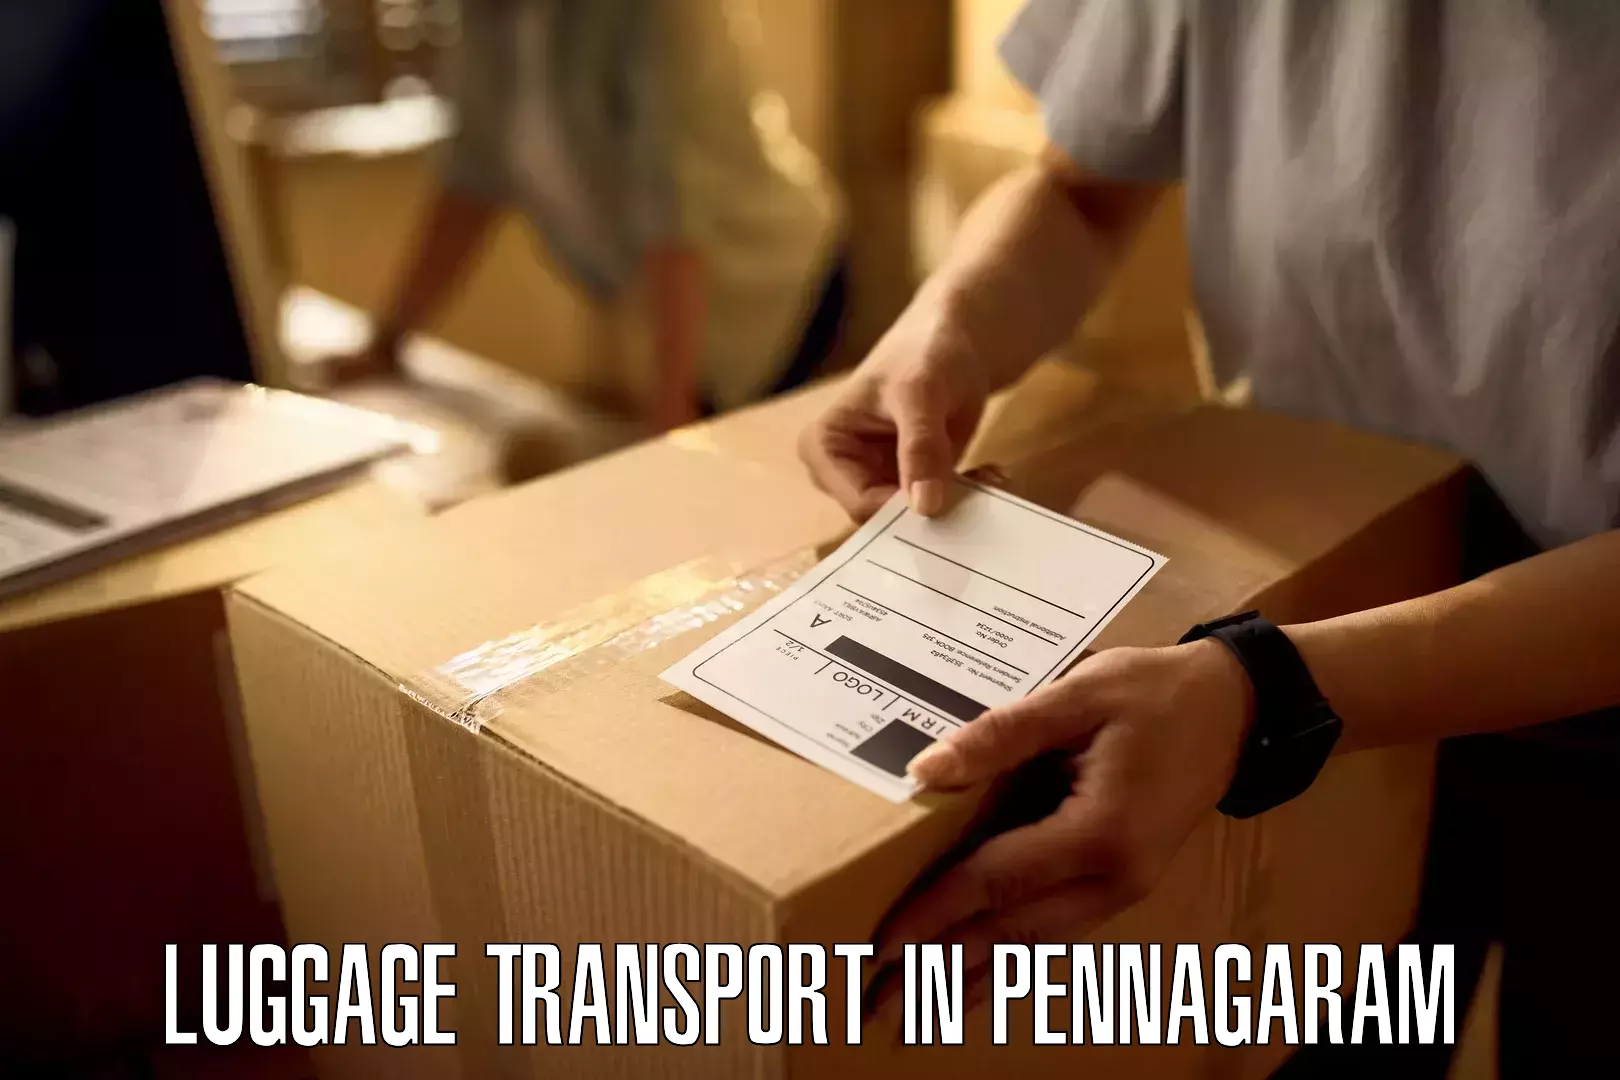 Luggage shipping discounts in Pennagaram